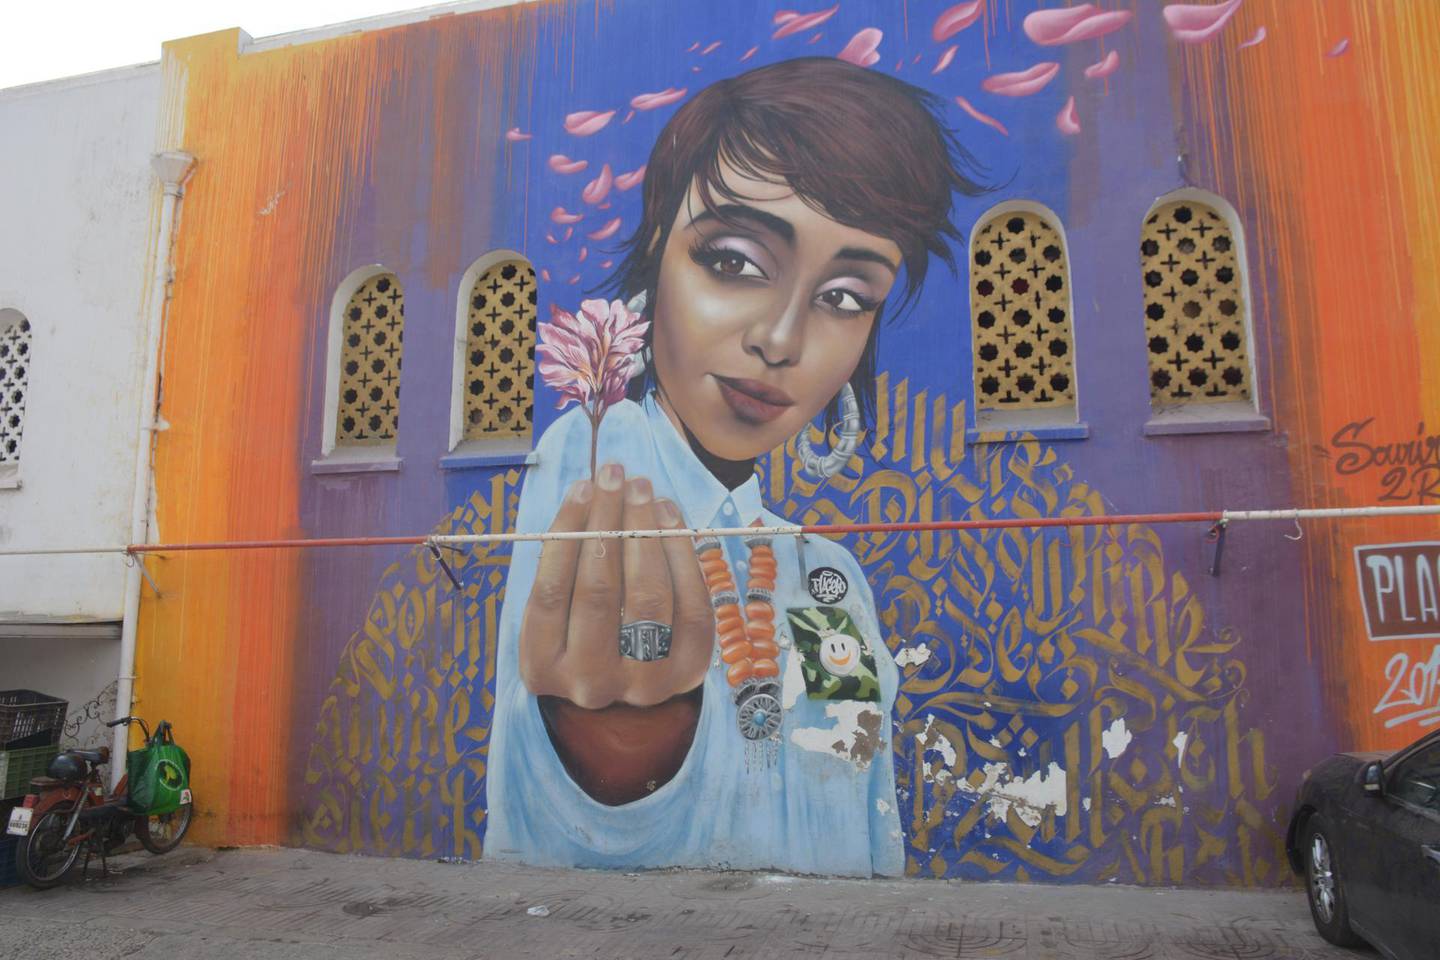 A mural in Casablanca city centre. Rosemary Behan